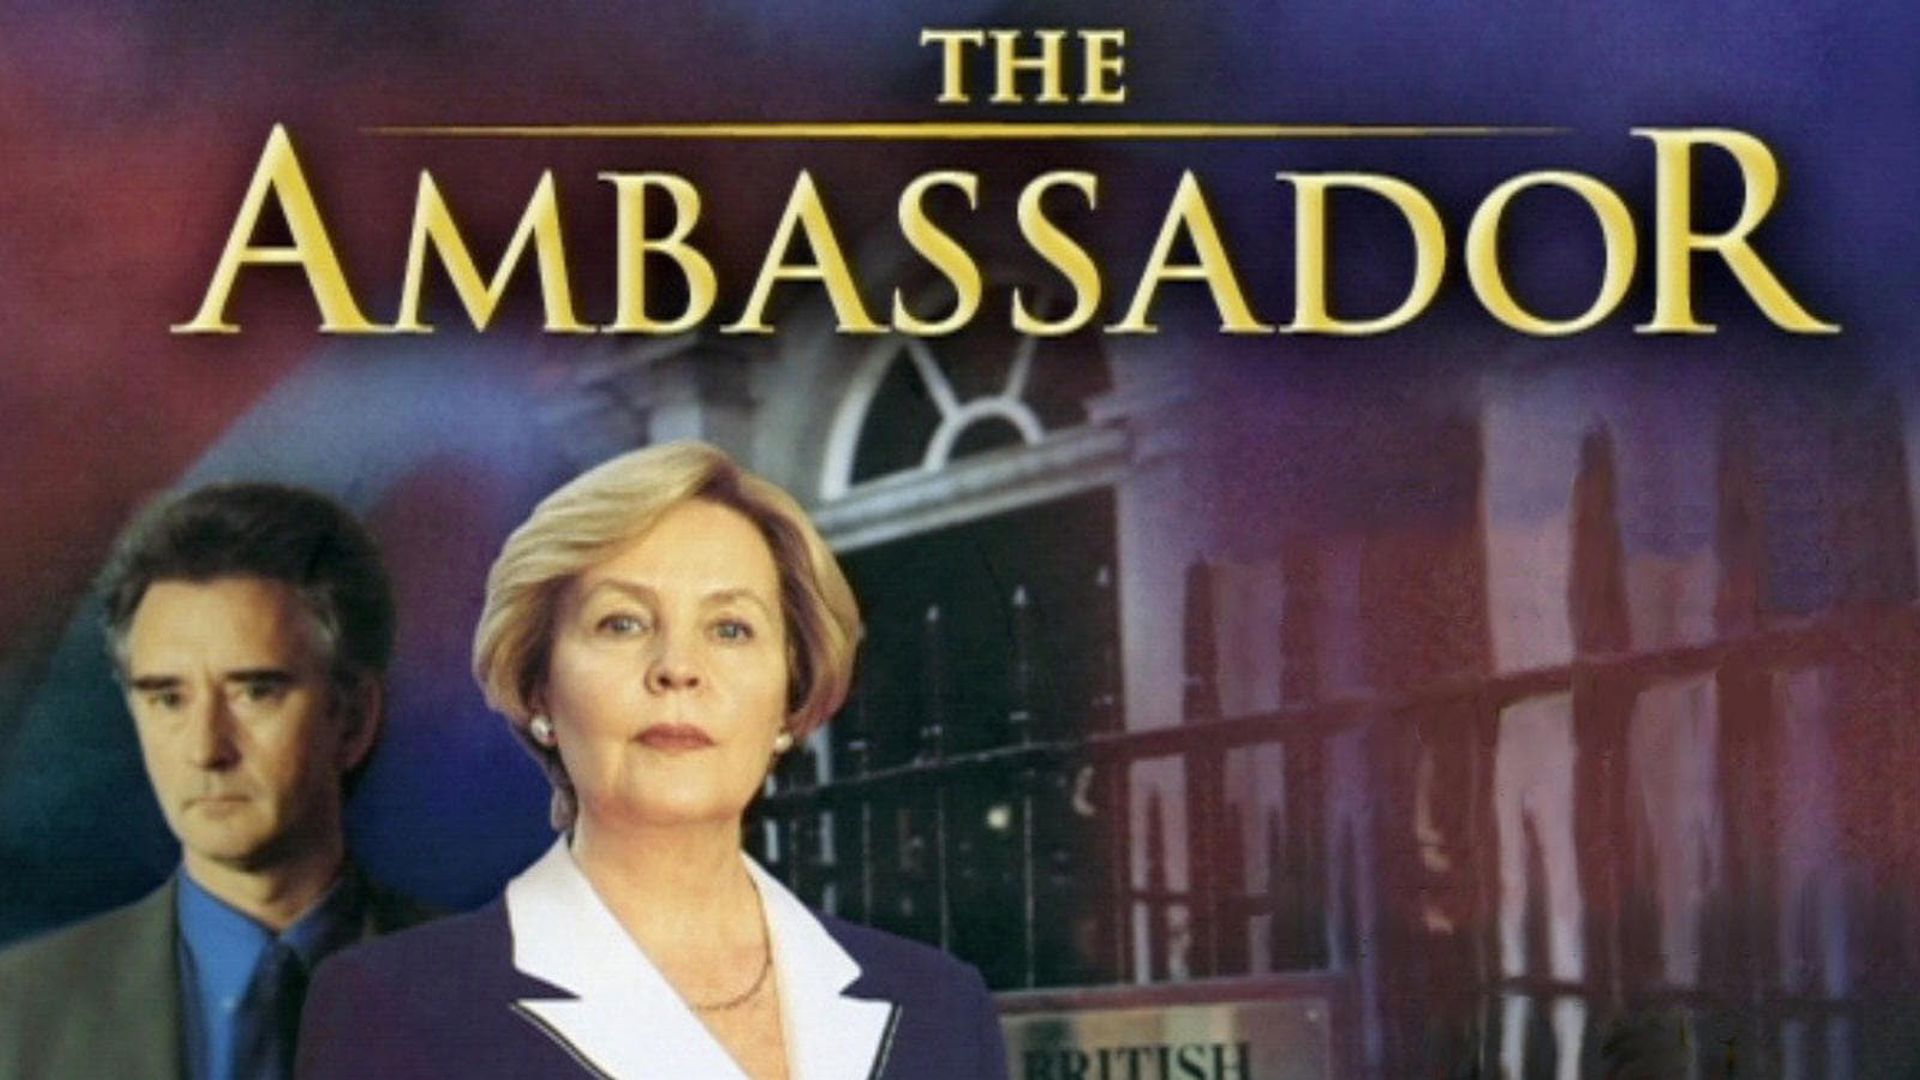 The Ambassador background